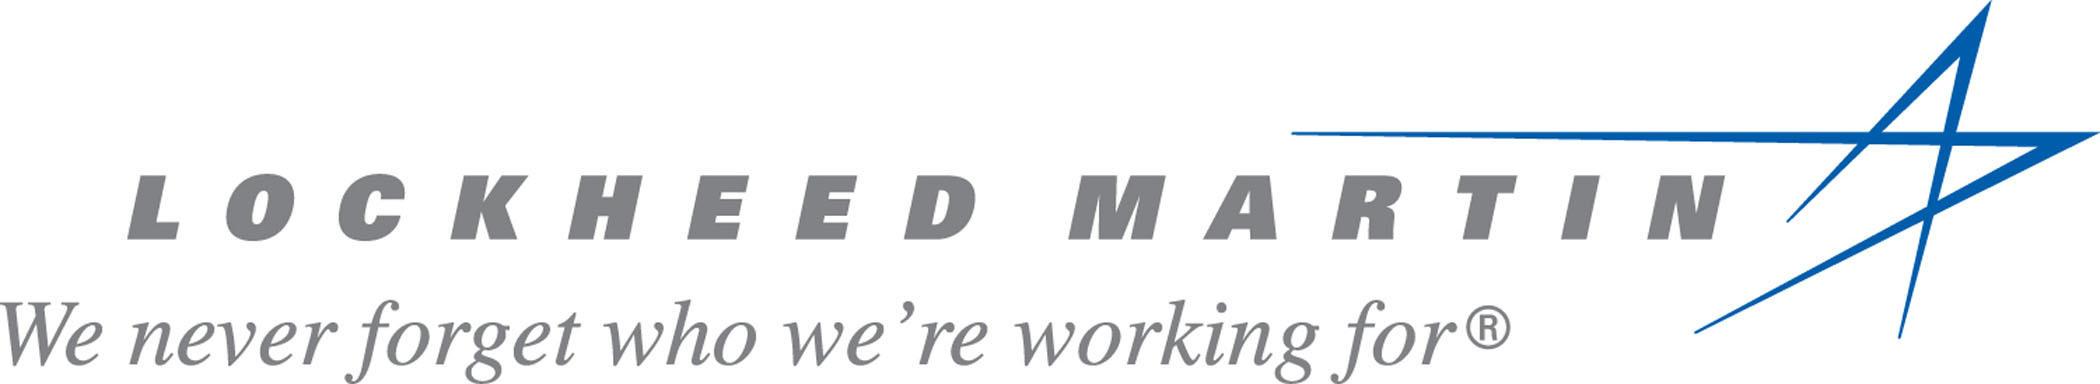 Lockheed Martin Logo - Registration opens for Lockheed Martin's Pilot Web Portal